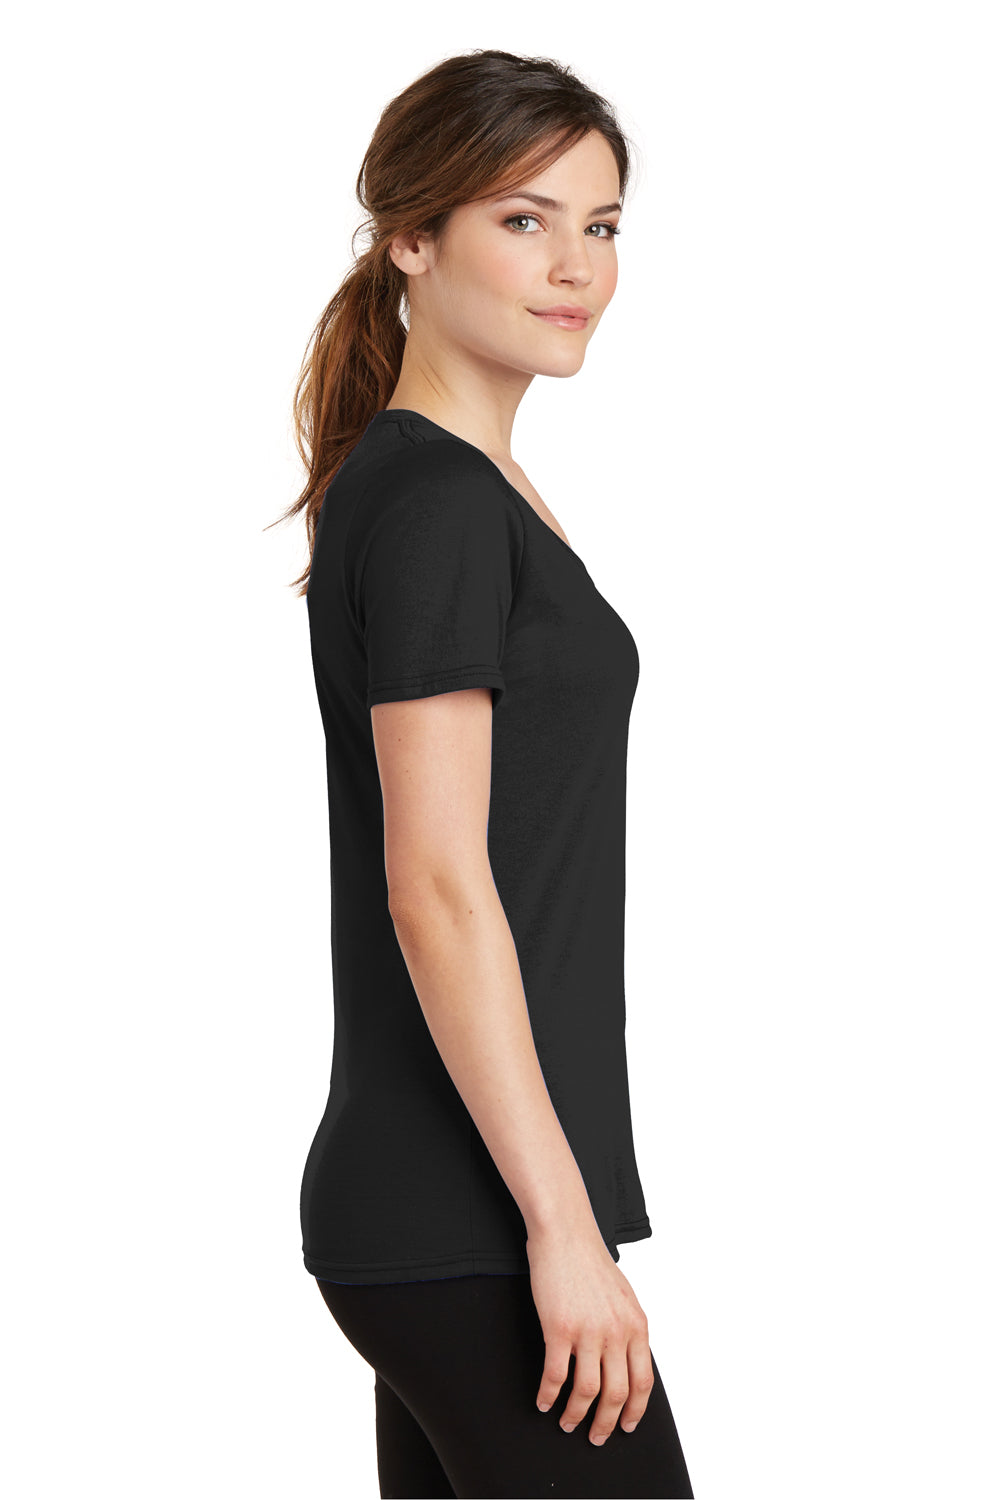 Port & Company LPC381V Womens Dry Zone Performance Moisture Wicking Short Sleeve V-Neck T-Shirt Black Side